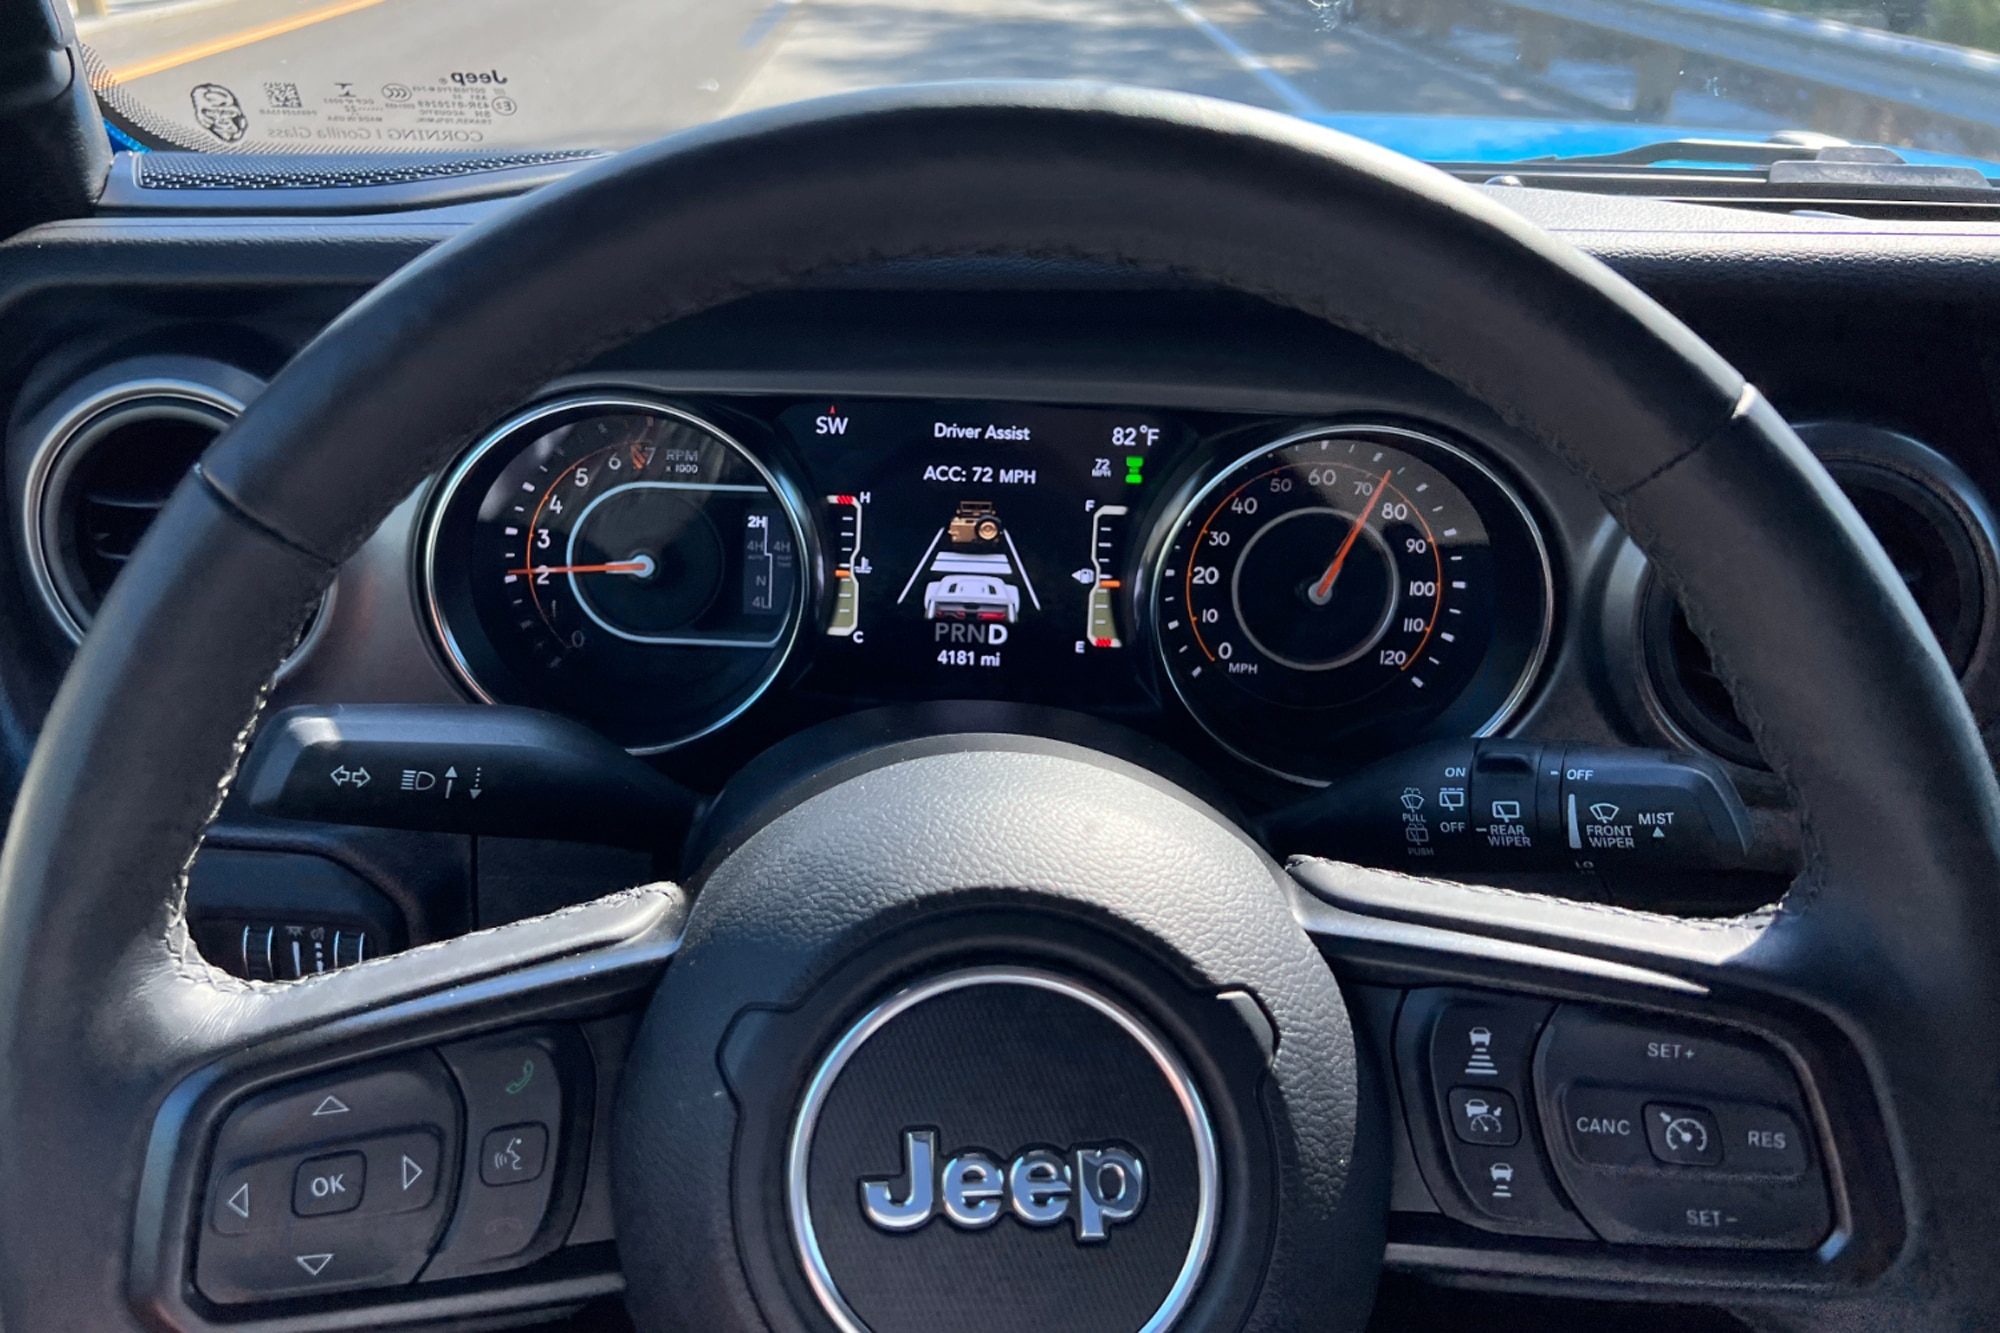 2022 Jeep Wrangler Adaptive Cruise Control and steering wheel